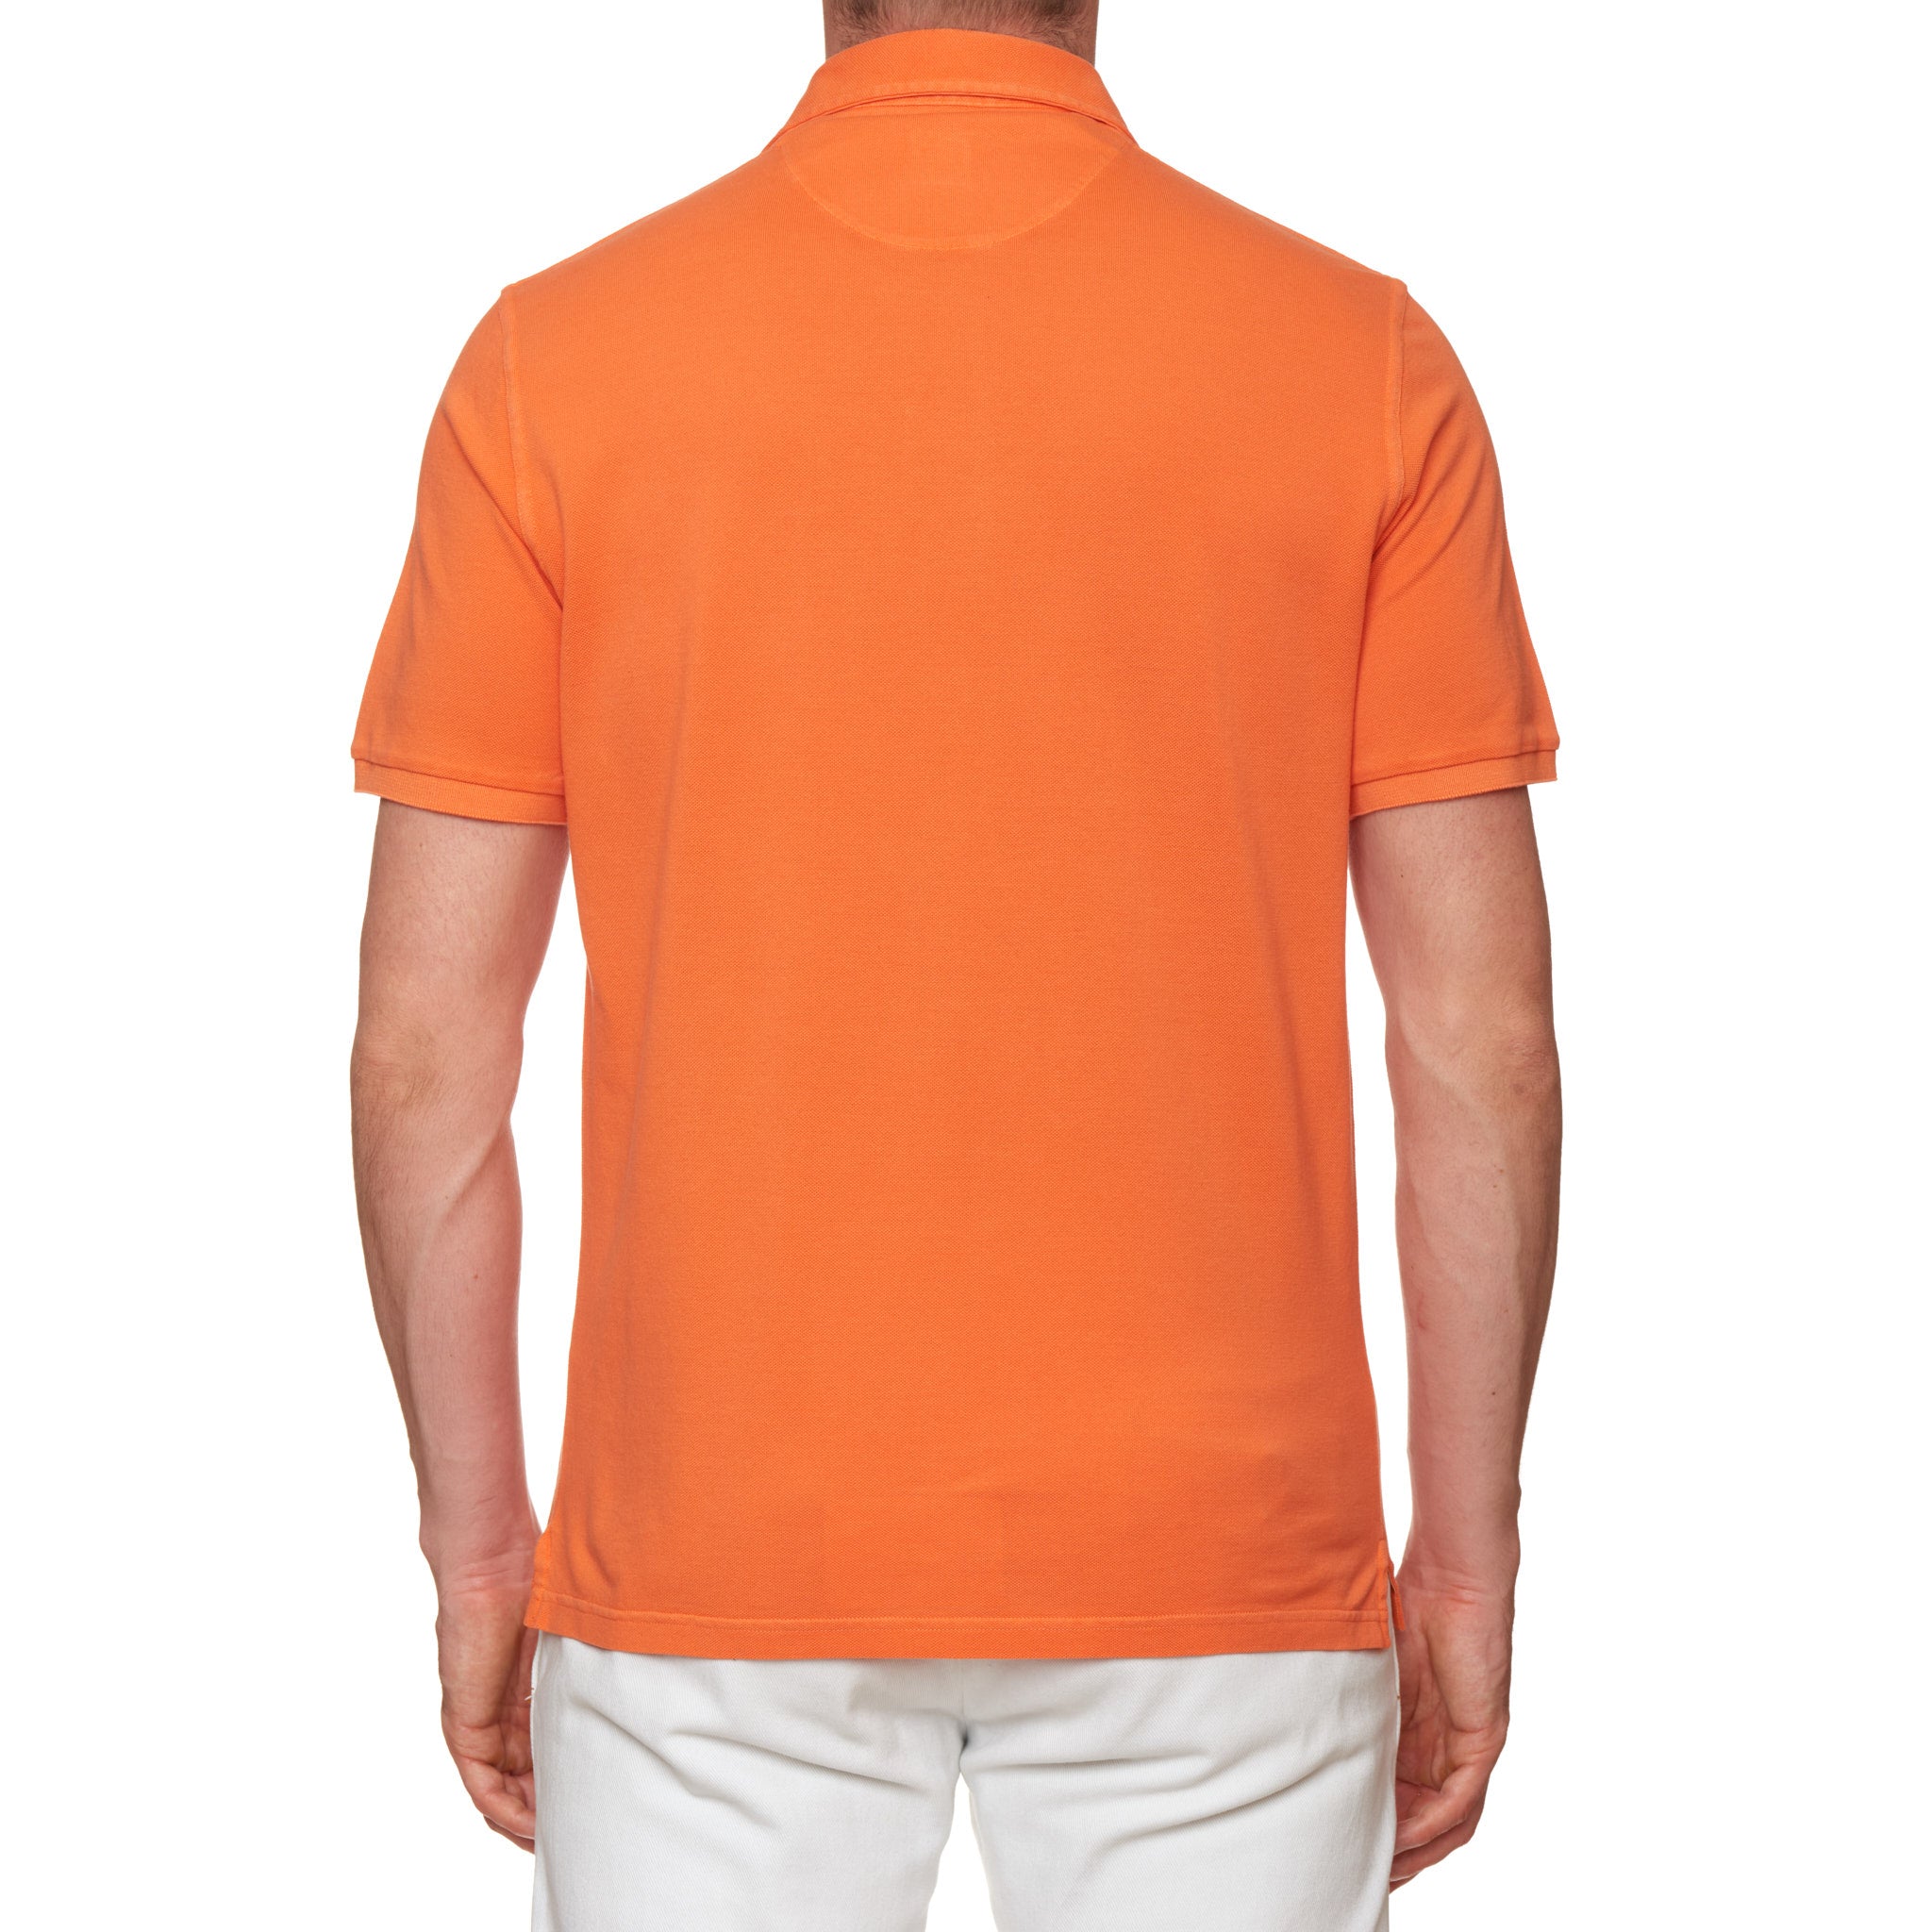 FEDELI "North" Neon Orange Cotton Pique Short Sleeve Polo Shirt EU 50 NEW US M